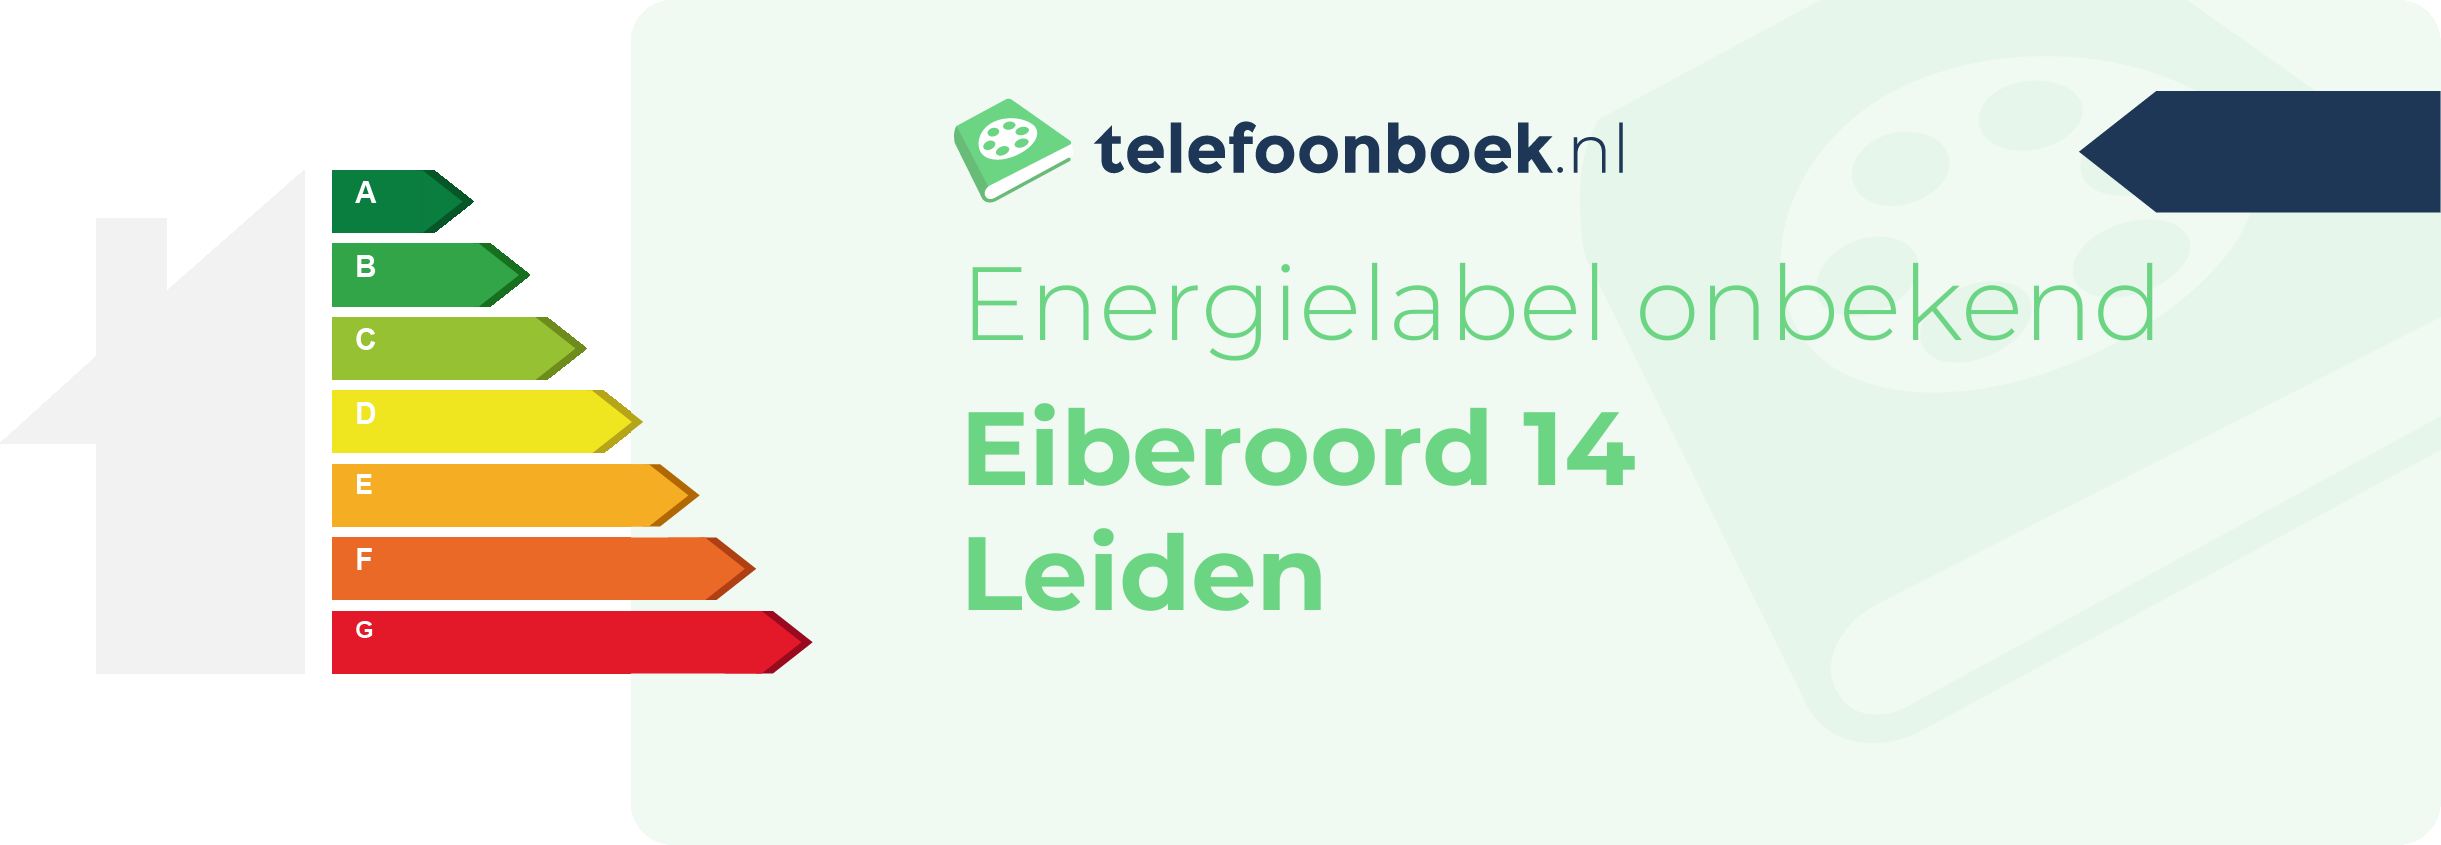 Energielabel Eiberoord 14 Leiden